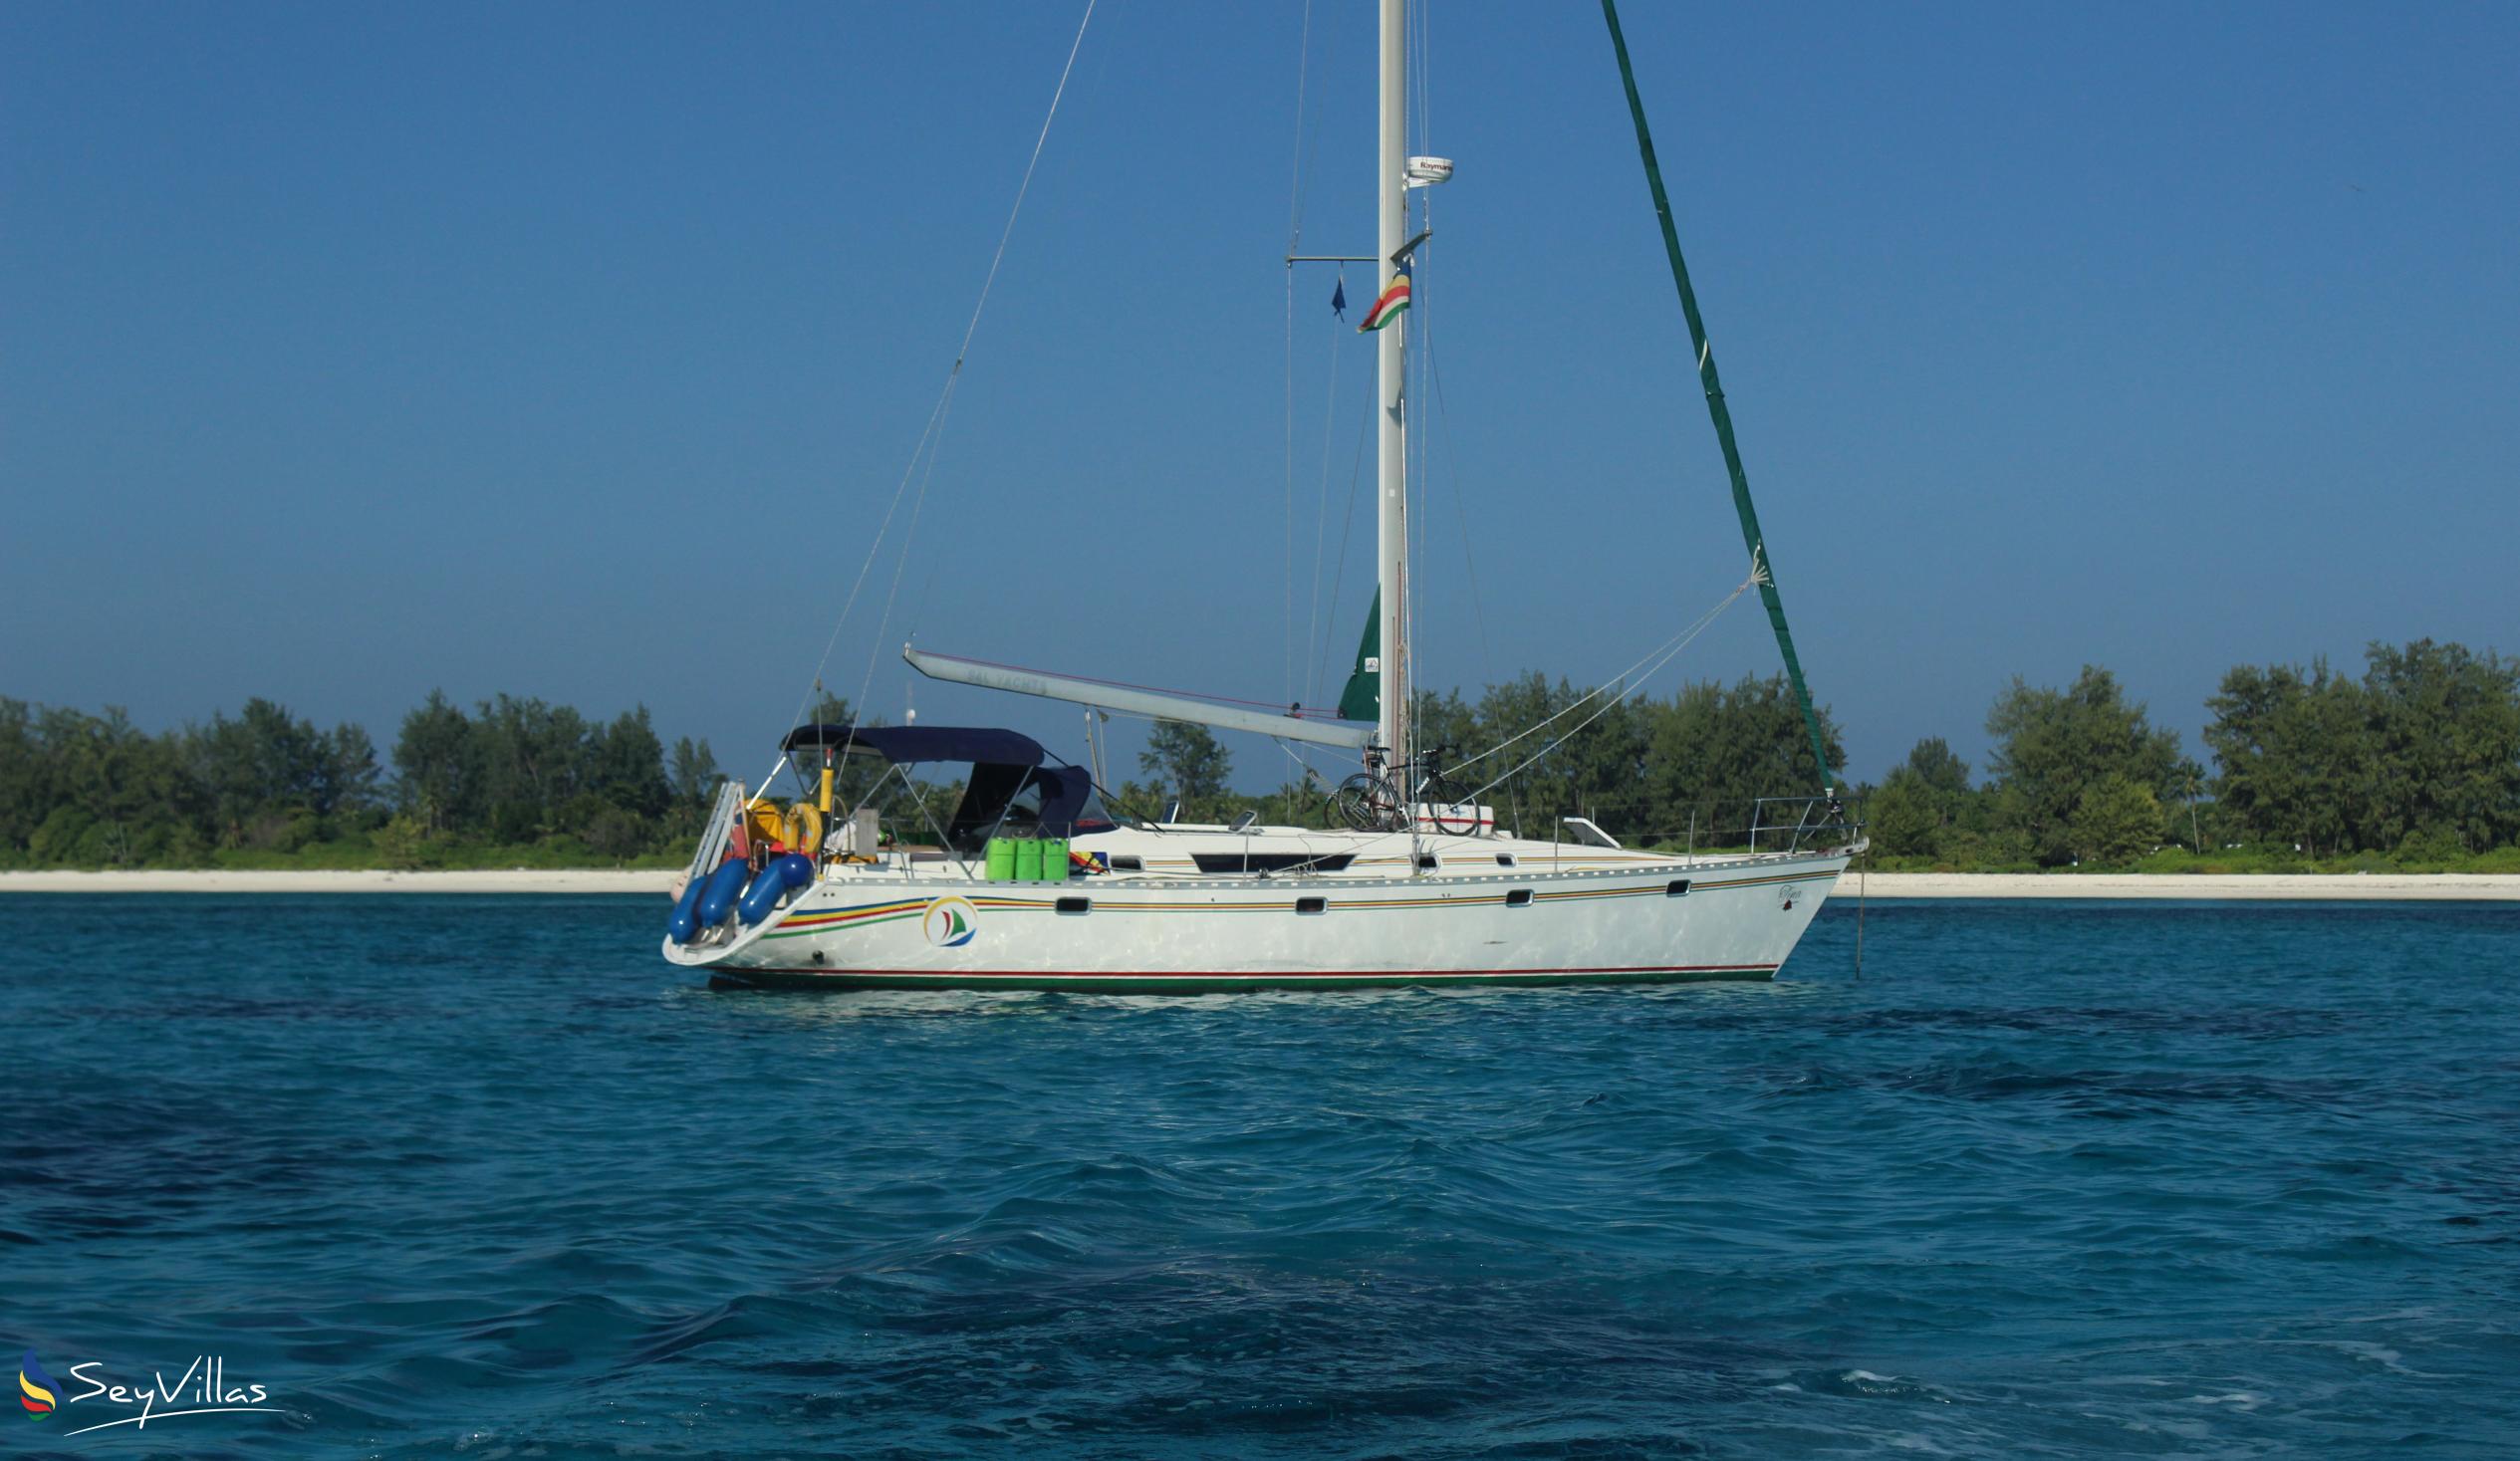 Photo 3: Seyscapes Yacht Charter - Outdoor area - Seychelles (Seychelles)